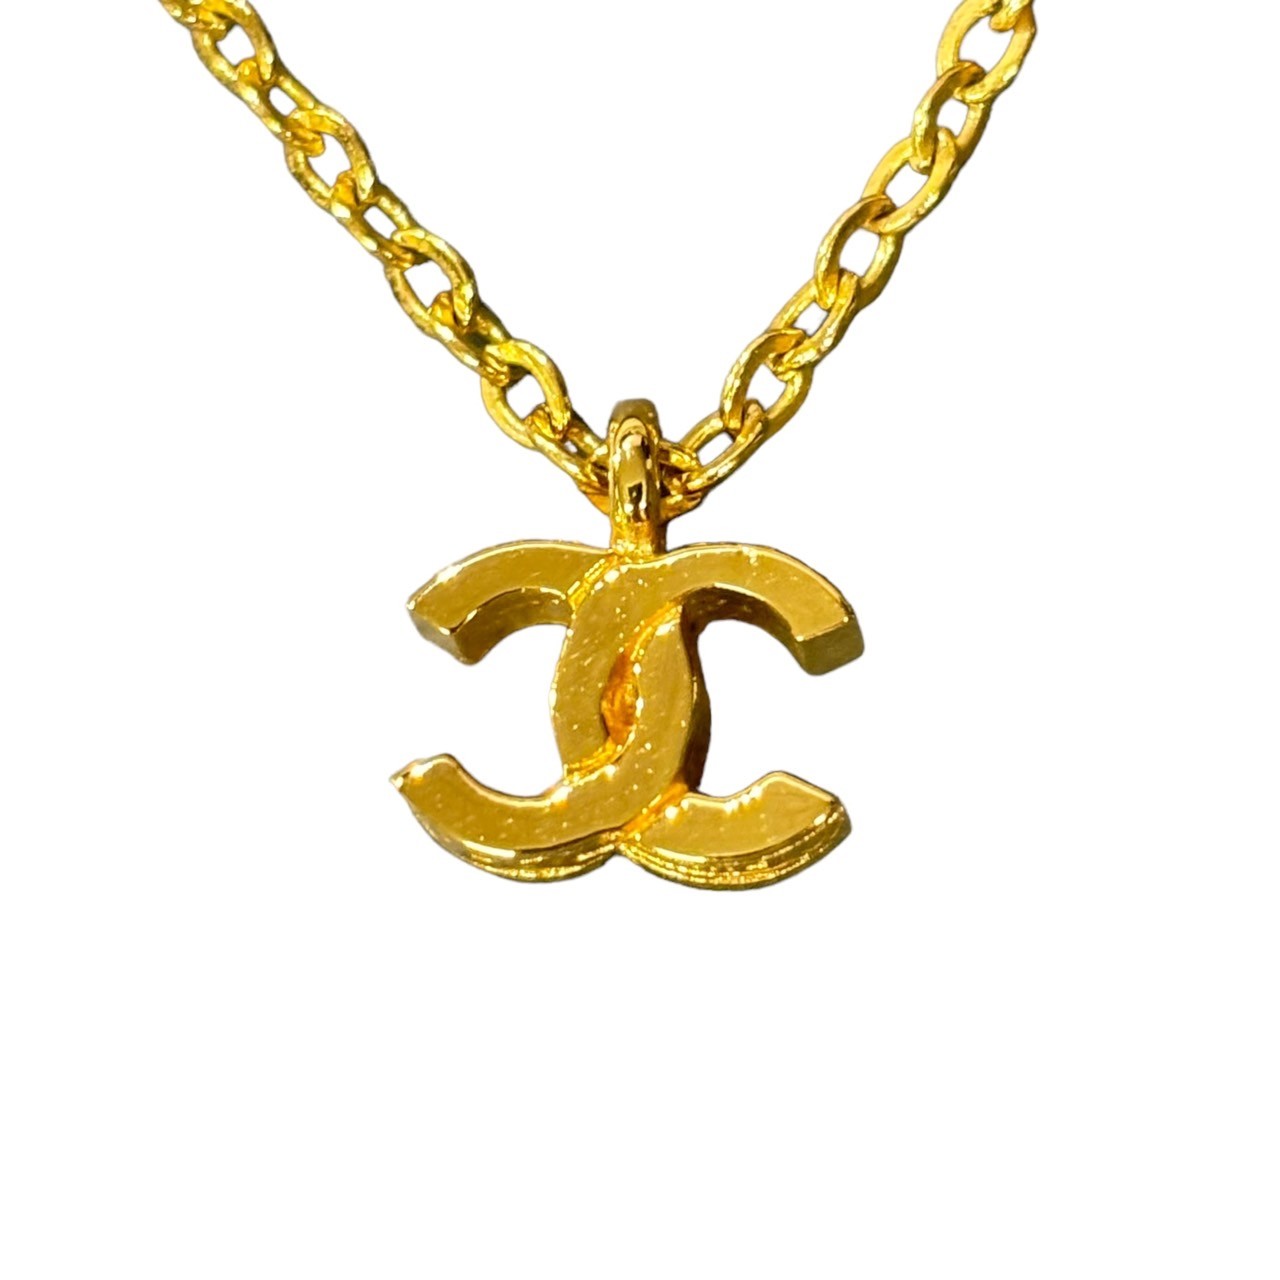 CHANEL(シャネル) 70's coco mark chain necklace ココマーク チェーン ネックレス ゴールド 刻印376 70年代 ヴィンテージ ジュエリー ペンダント